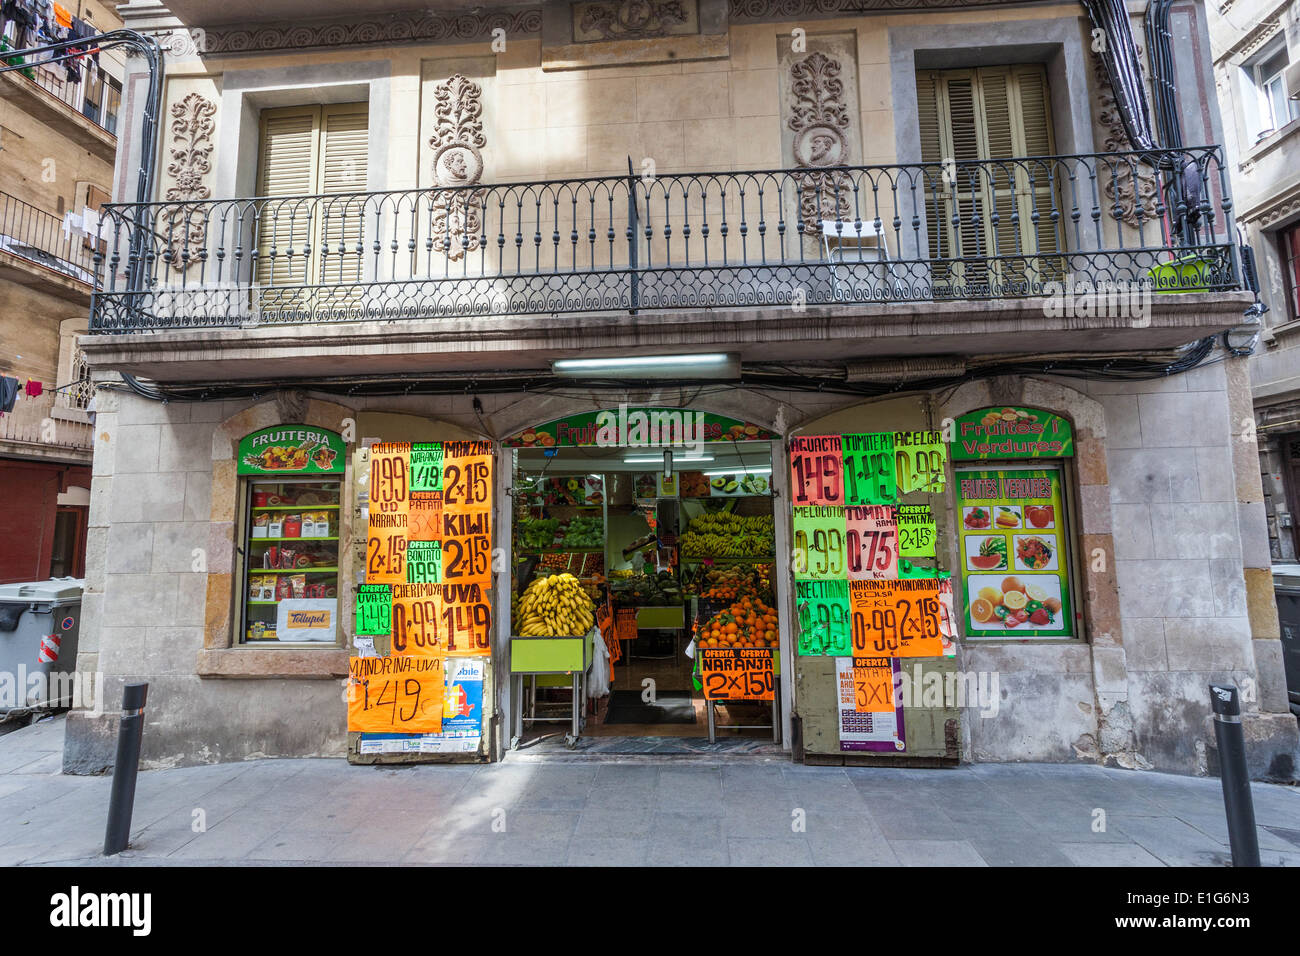 Fruteria, fruit shop, Carrer de la Maquinista, Barcelona, Catalonia, Spain. Stock Photo